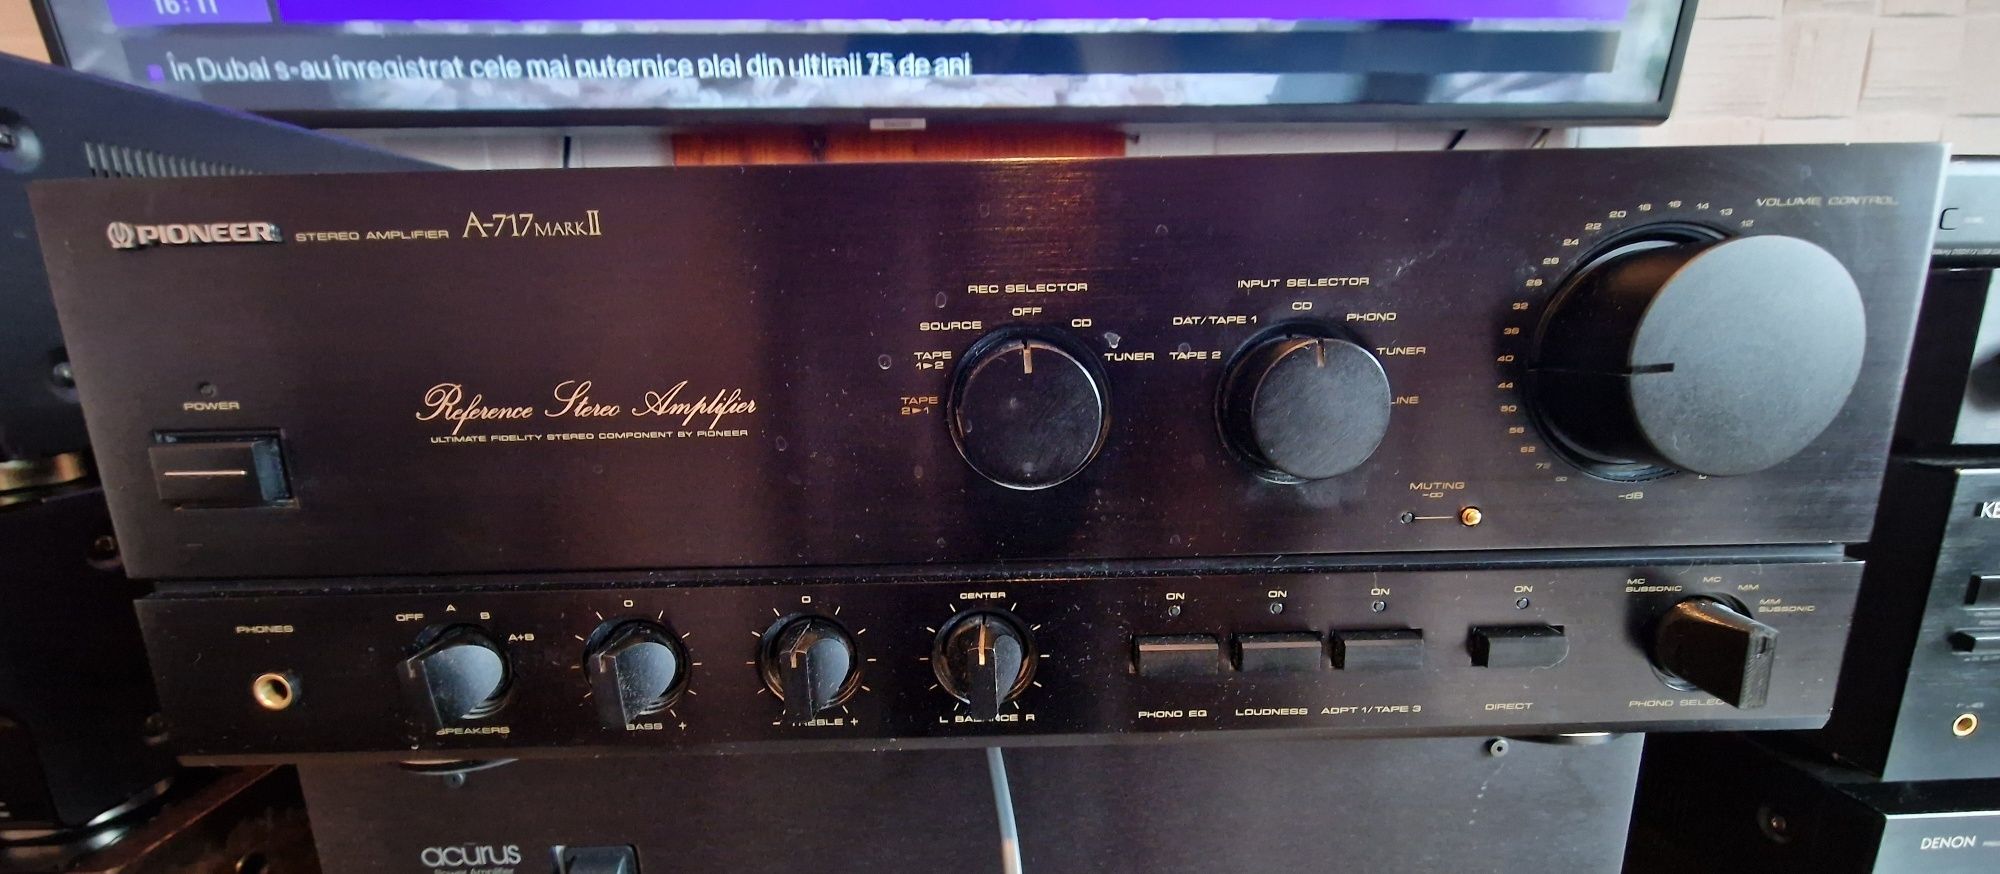 Pioneer A 717 mk2 ( sachimb) amplificator de top